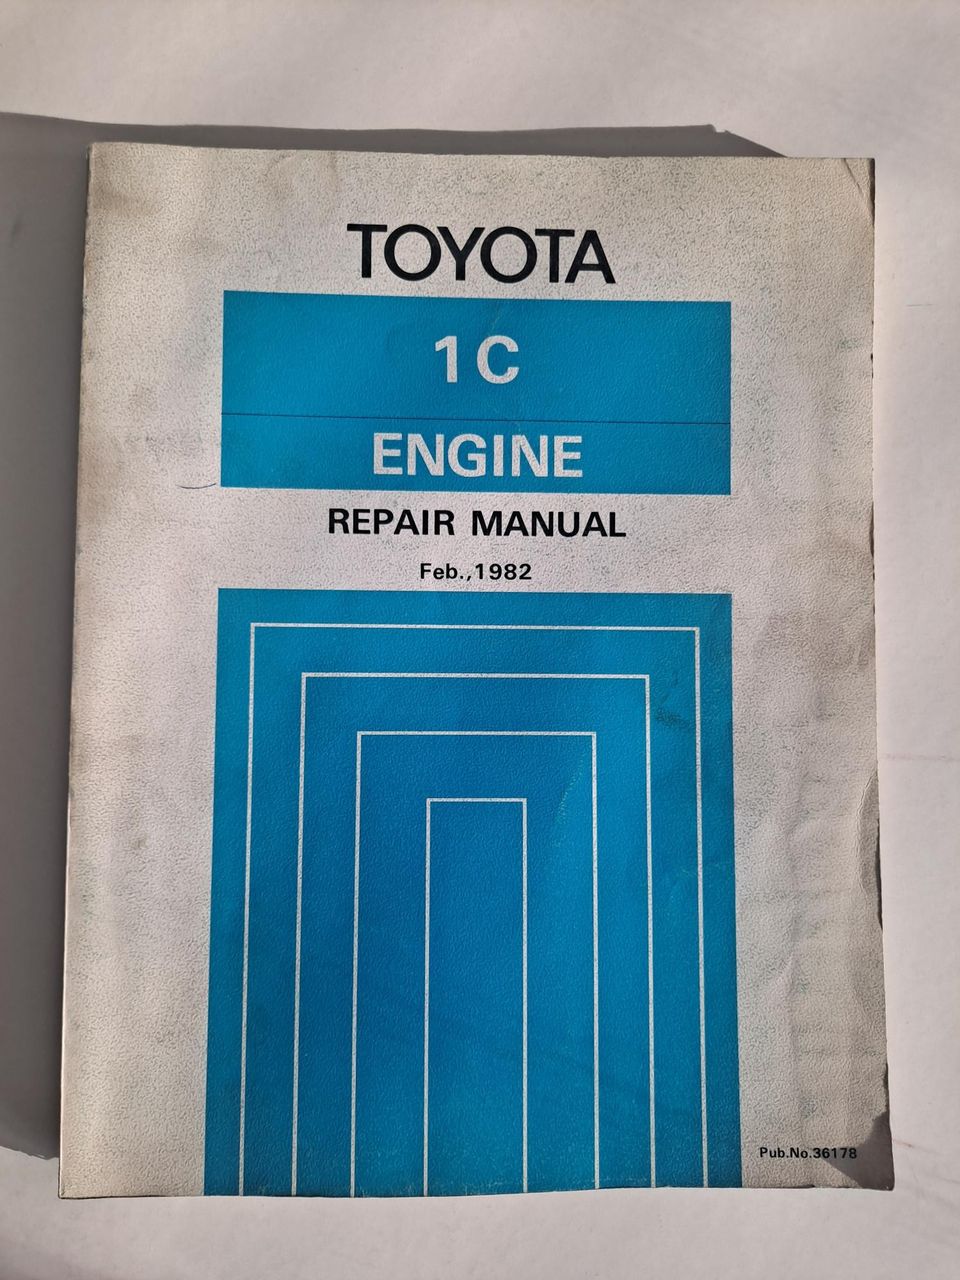 Toyota 1C engine opus